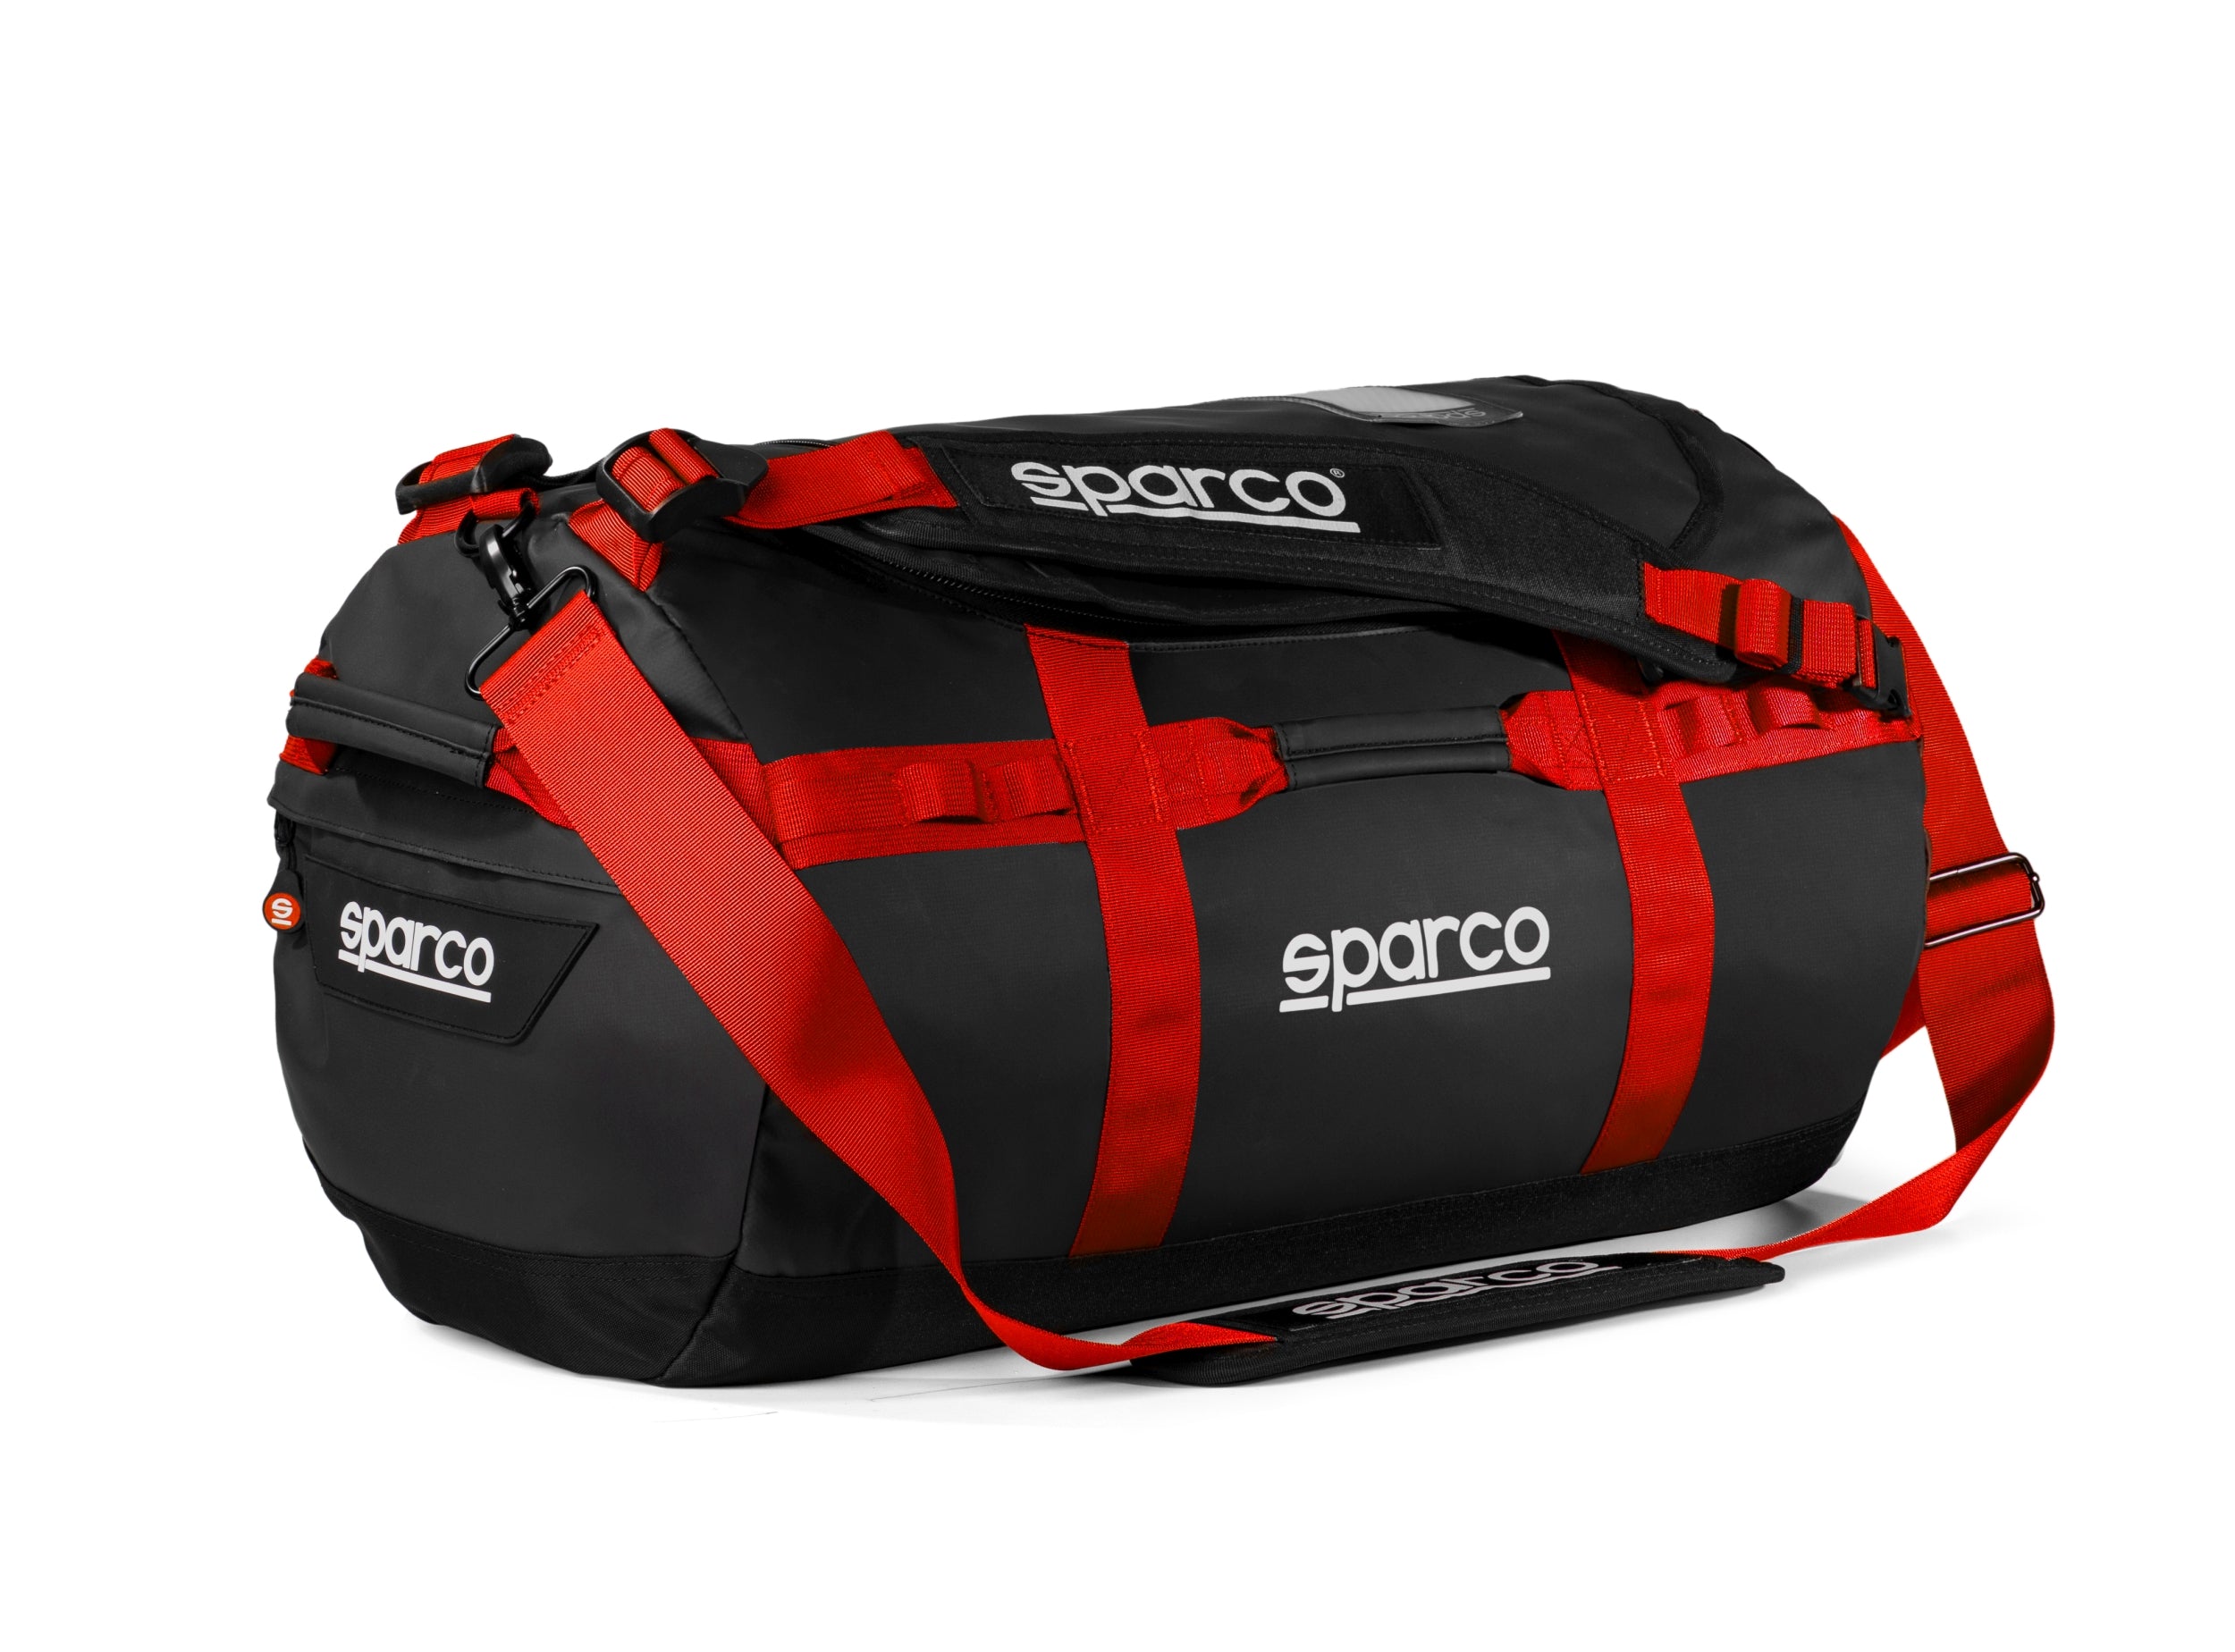 SPARCO 016443NRRS DAKAR-S DUFFLE BAG, 53 x 32.5 x 32.5 cm, black/red, size S Photo-1 